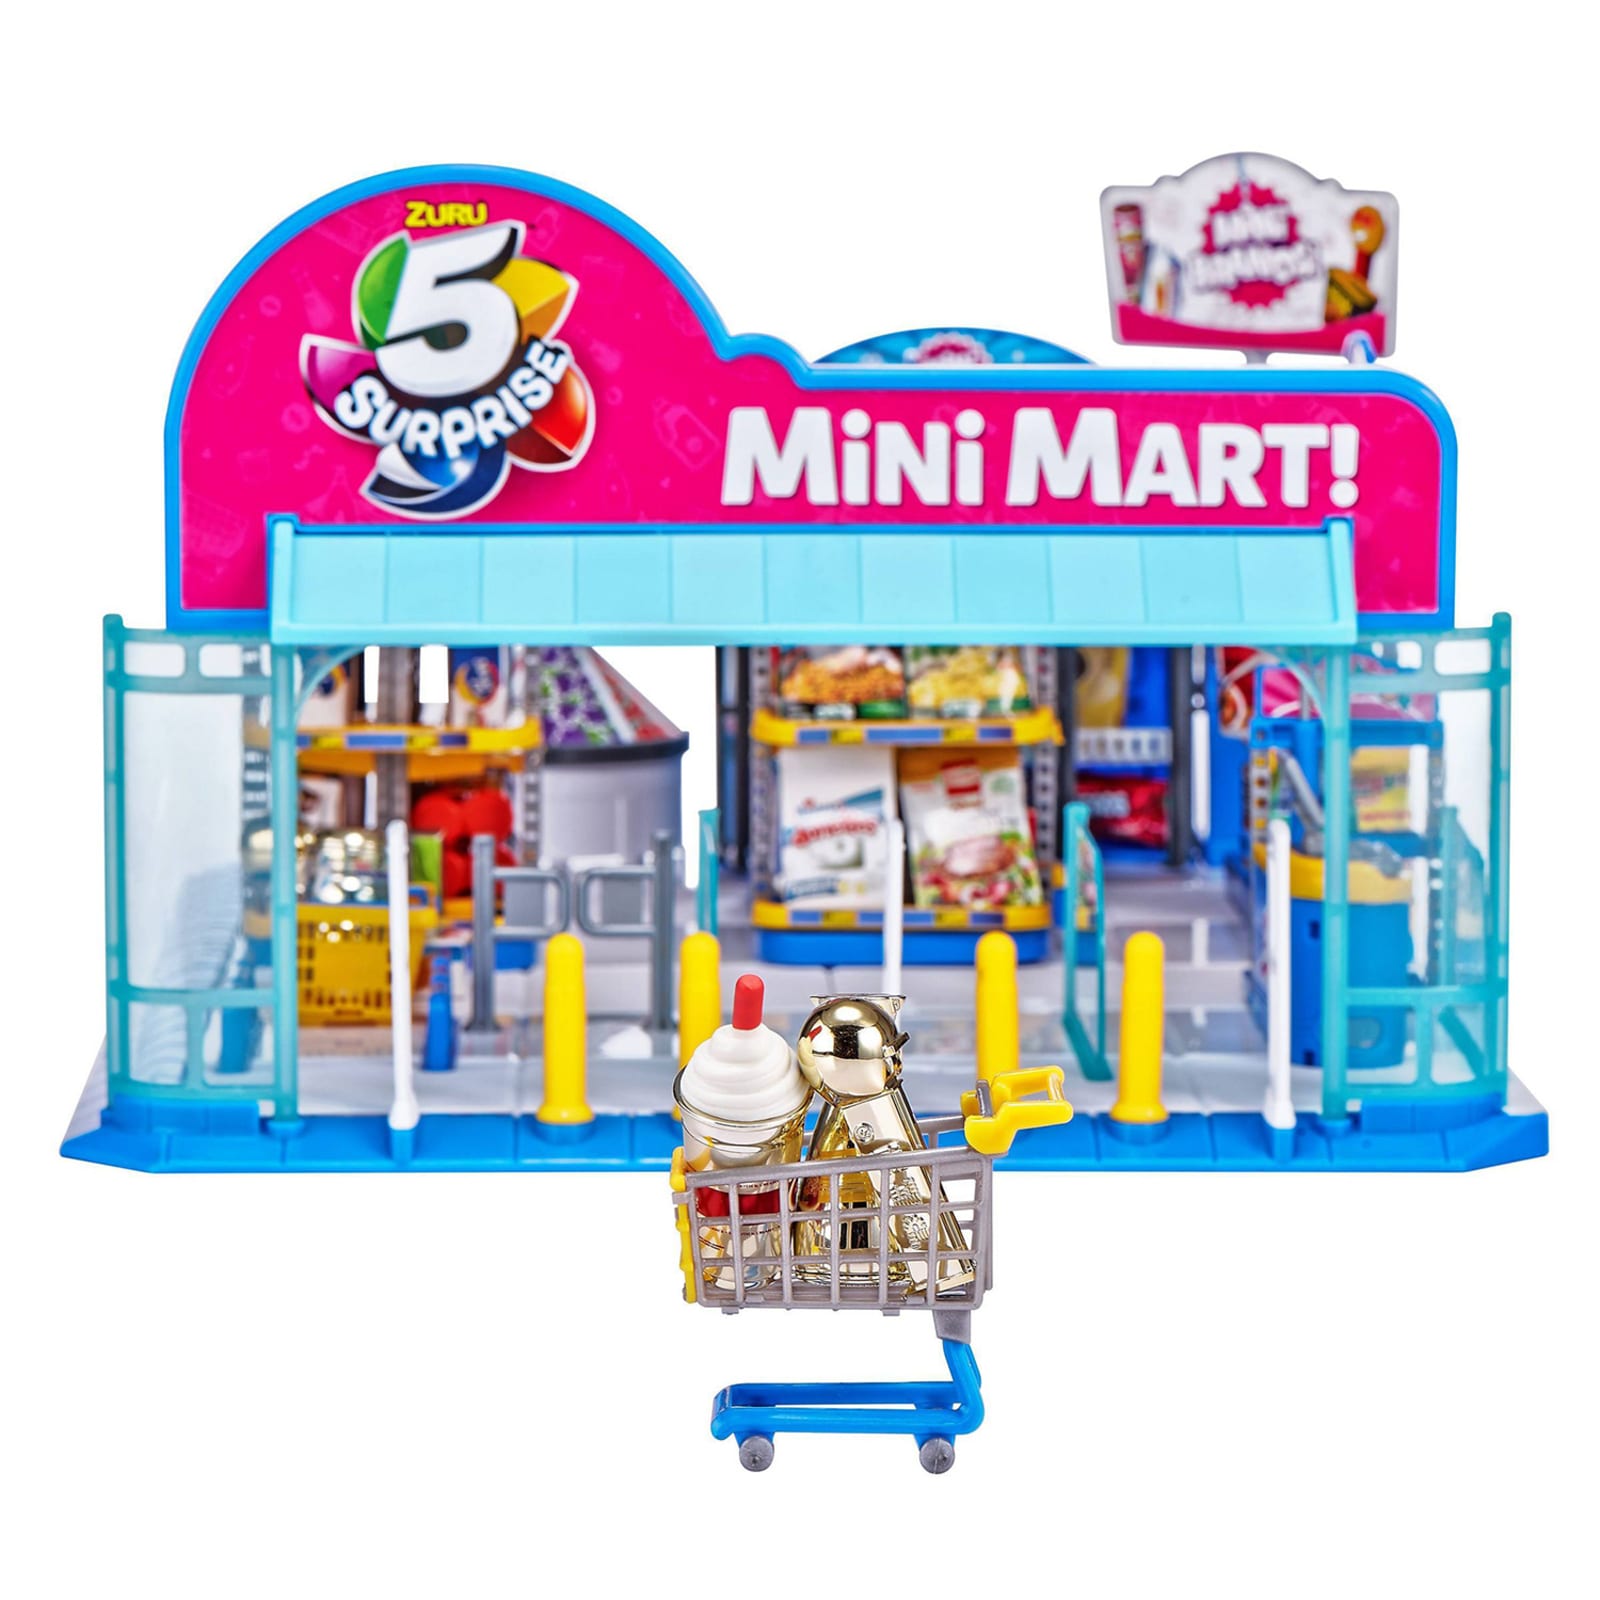 Mini Brands 5 Surprise Series 3 Electronic Mini Mart Playset by Zuru